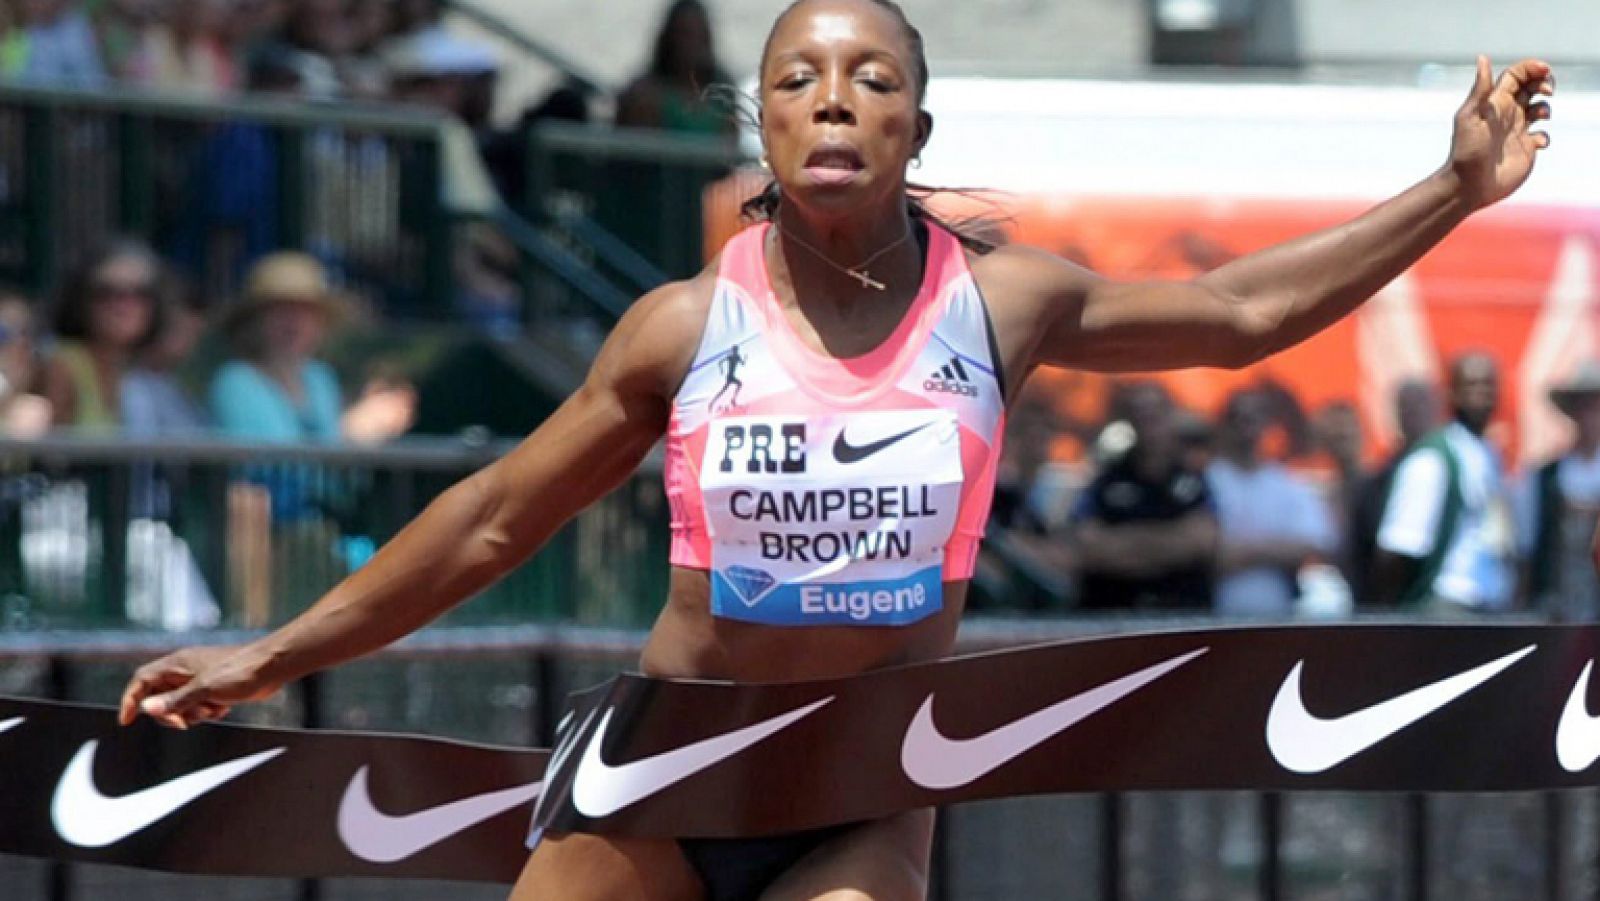 Telediario 1: Positivo de la atleta Verónica Campbell- Brown | RTVE Play